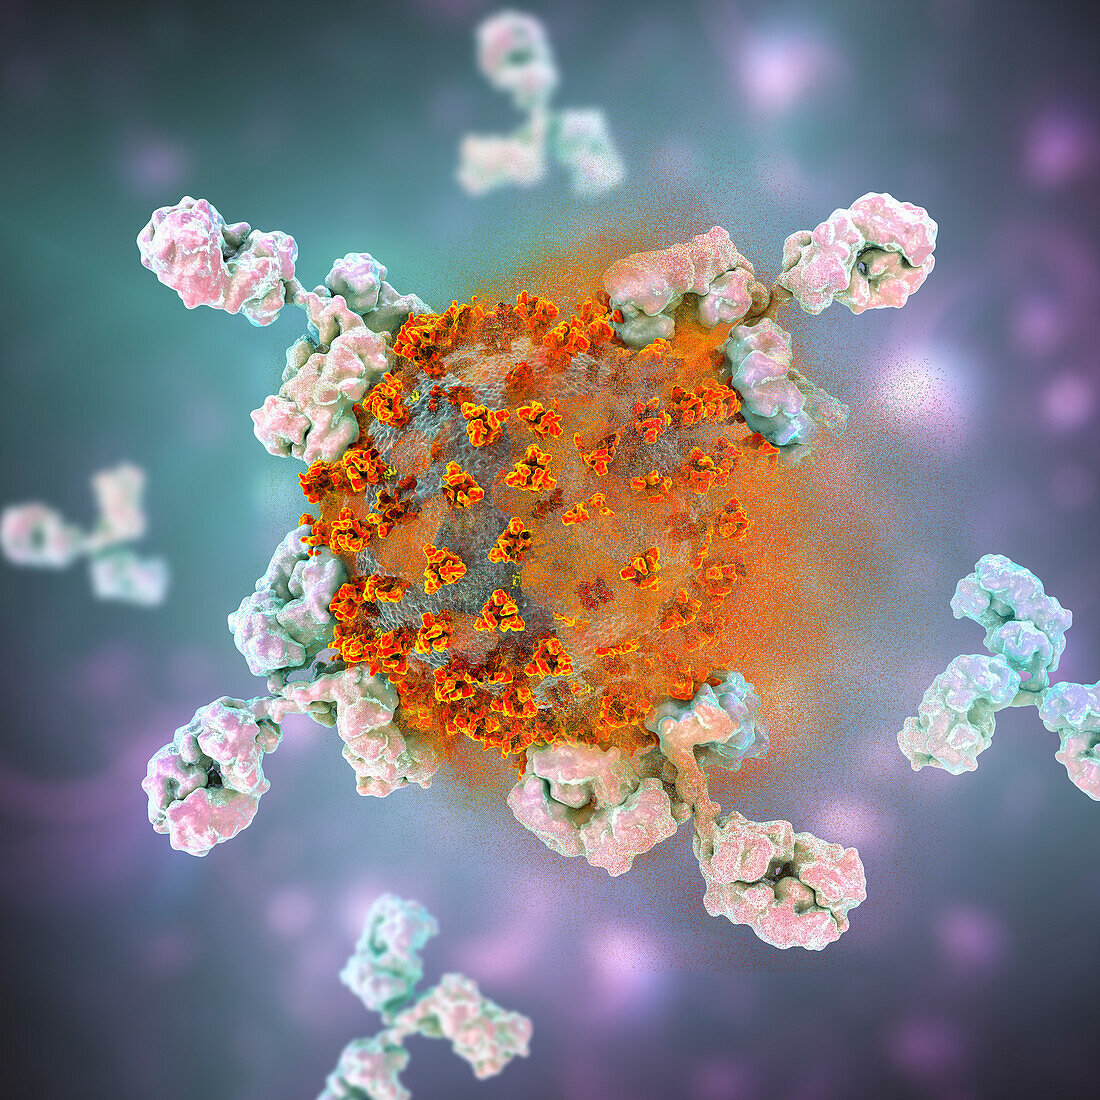 Antibodies responding to Covid-19 coronavirus, illustration